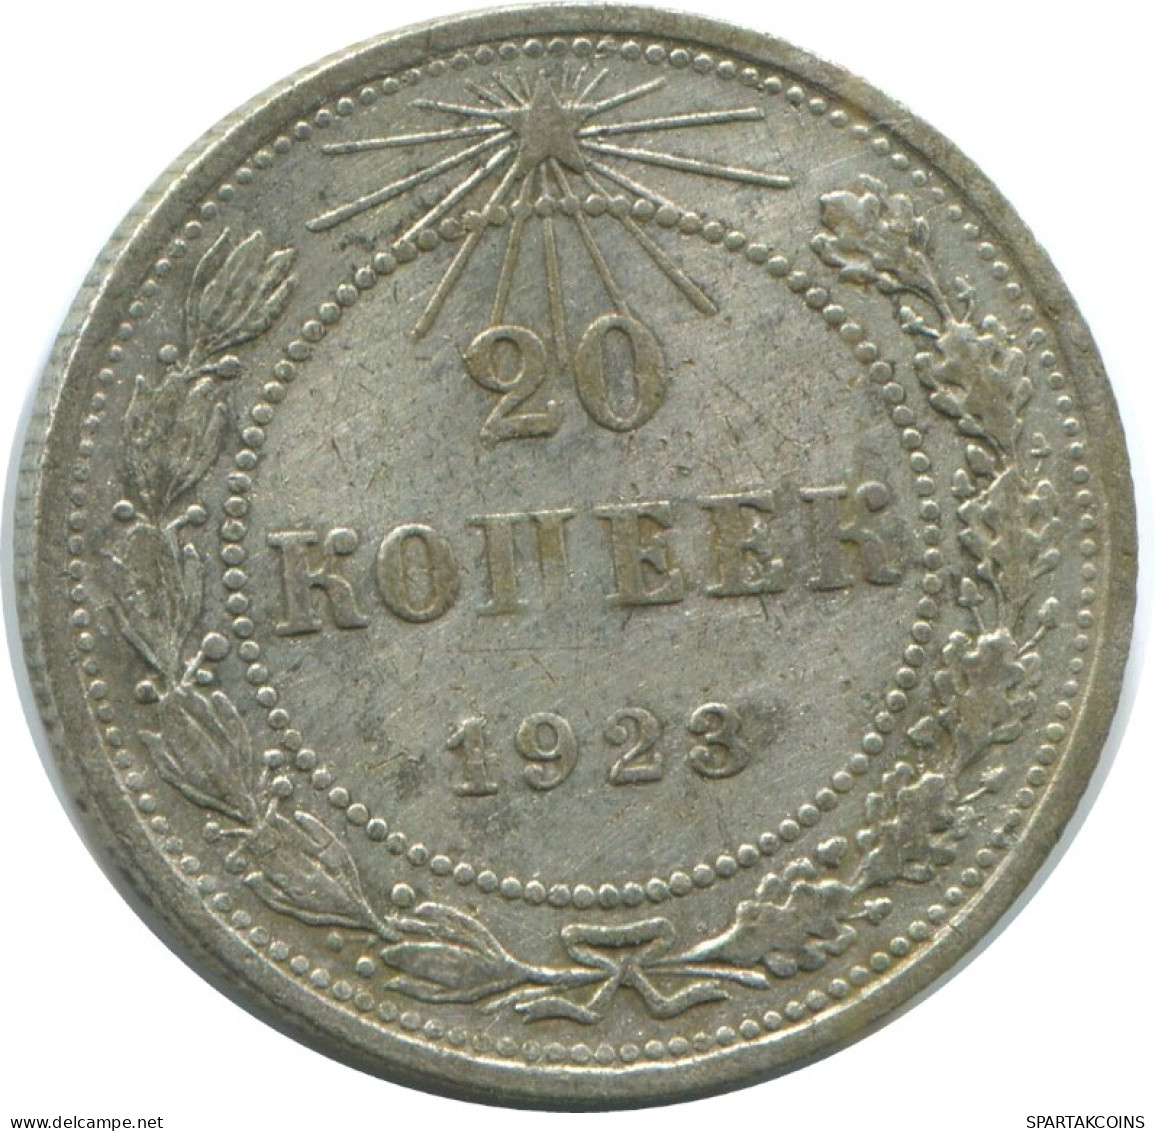 20 KOPEKS 1923 RUSSIA RSFSR SILVER Coin HIGH GRADE #AF465.4.U.A - Russie